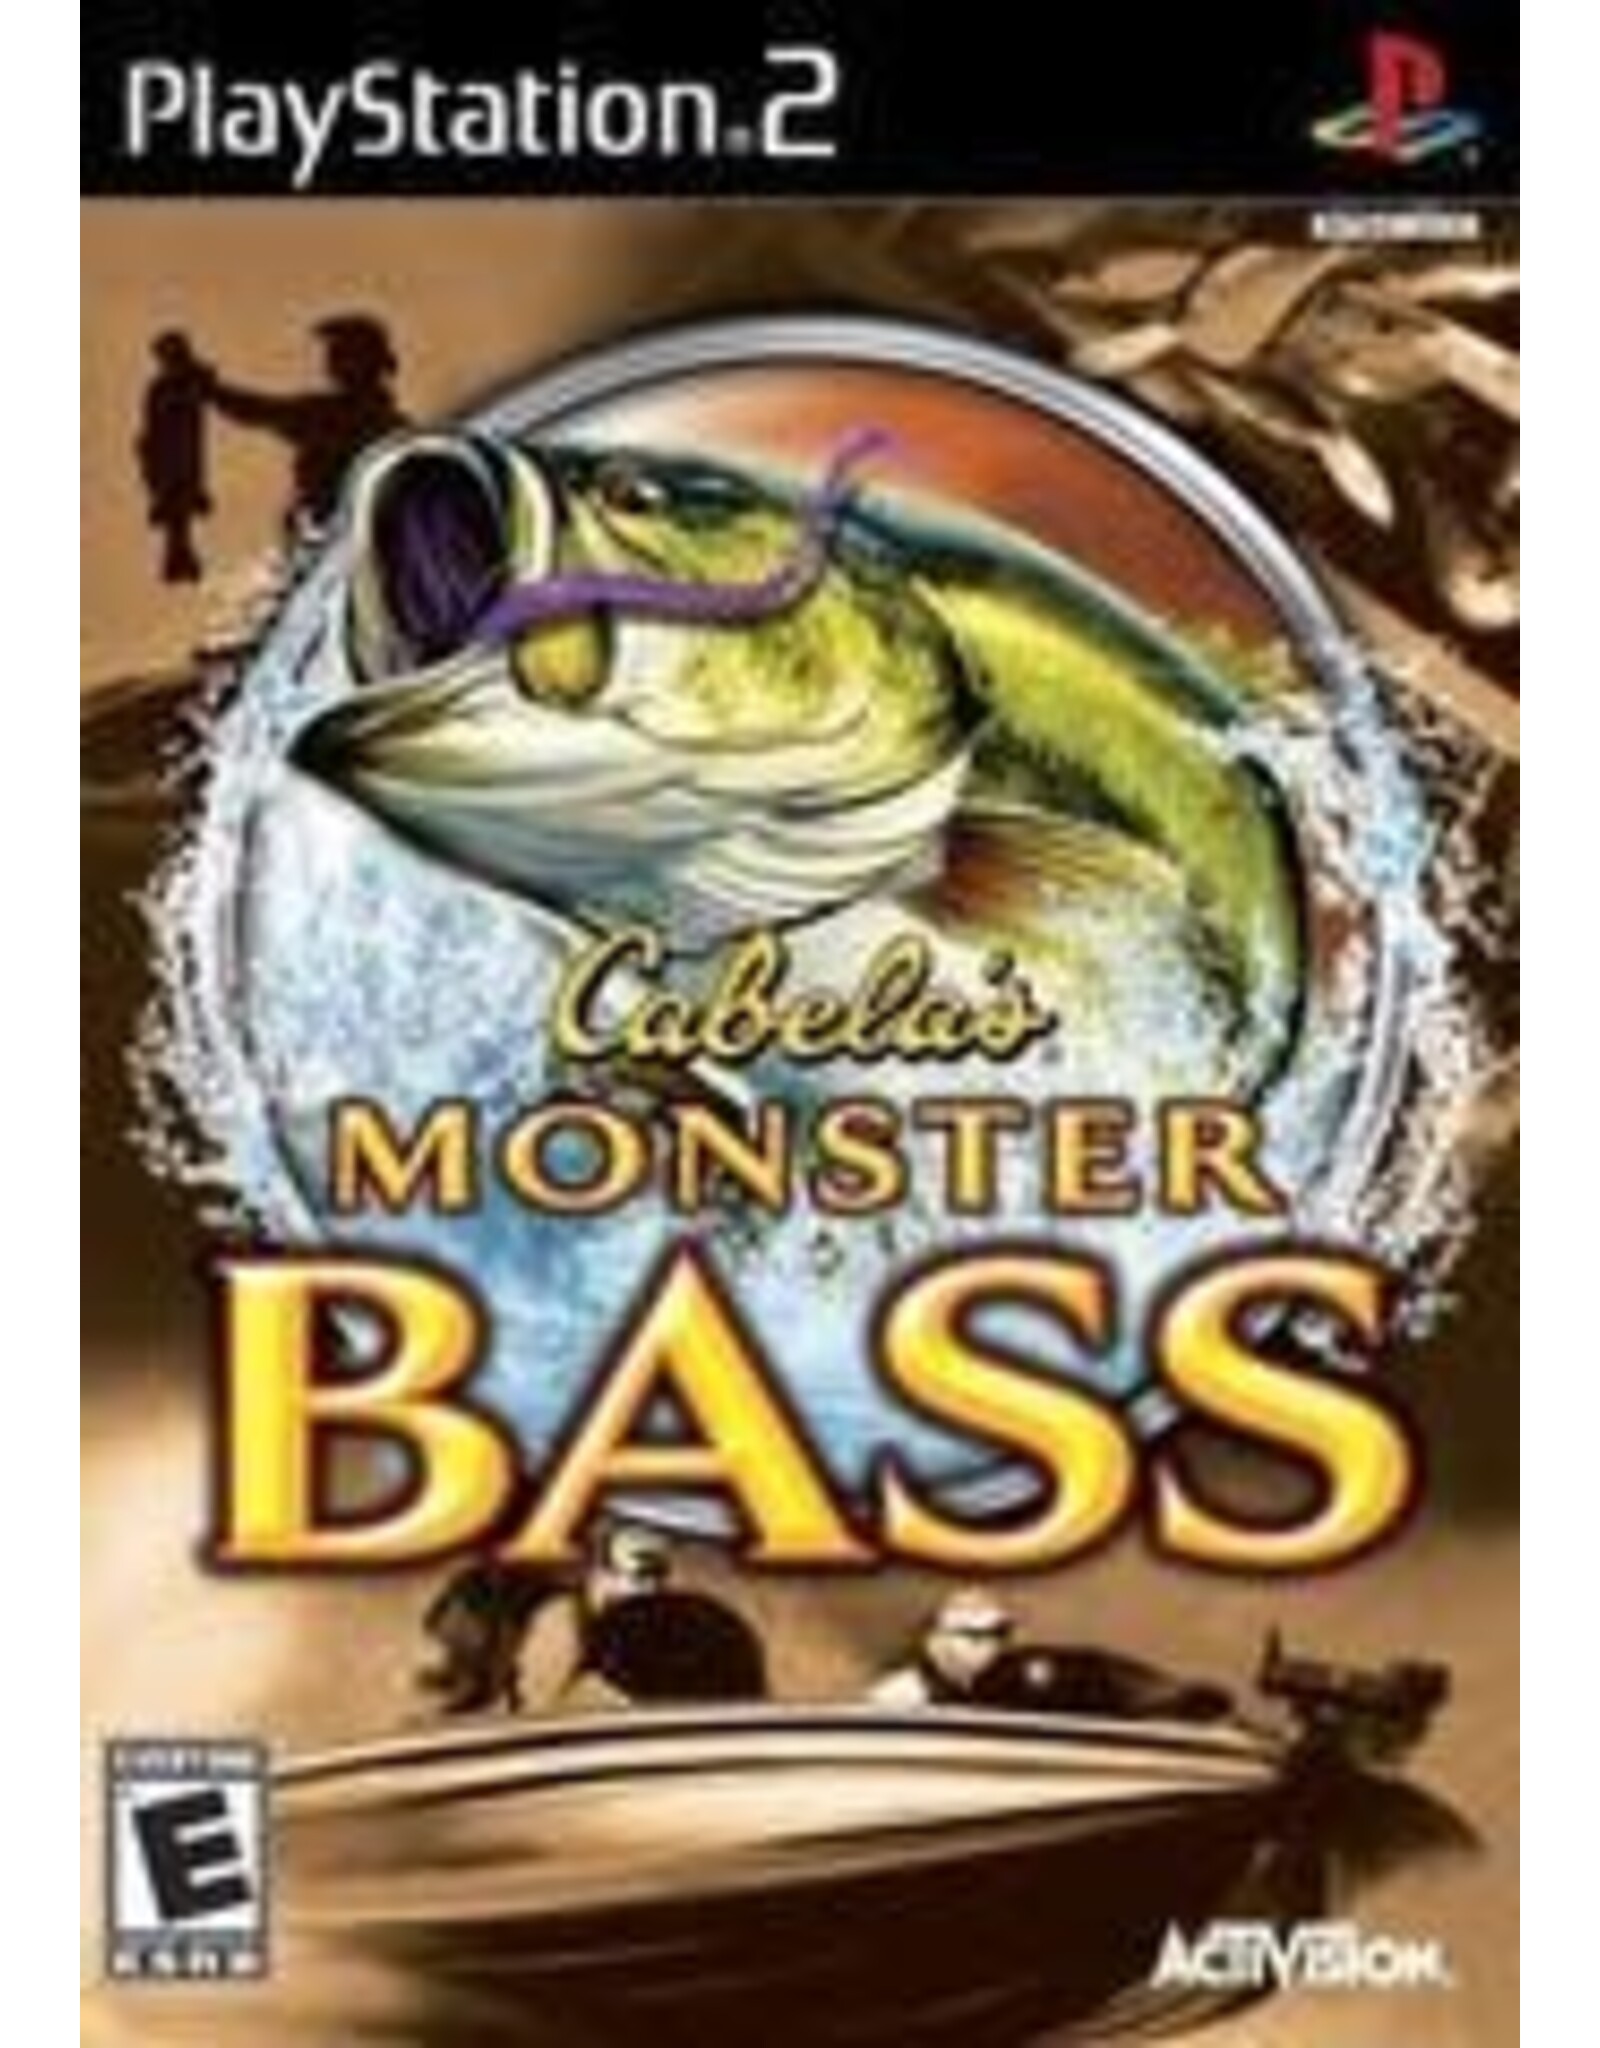 Playstation 2 Cabela's Monster Bass (CiB)